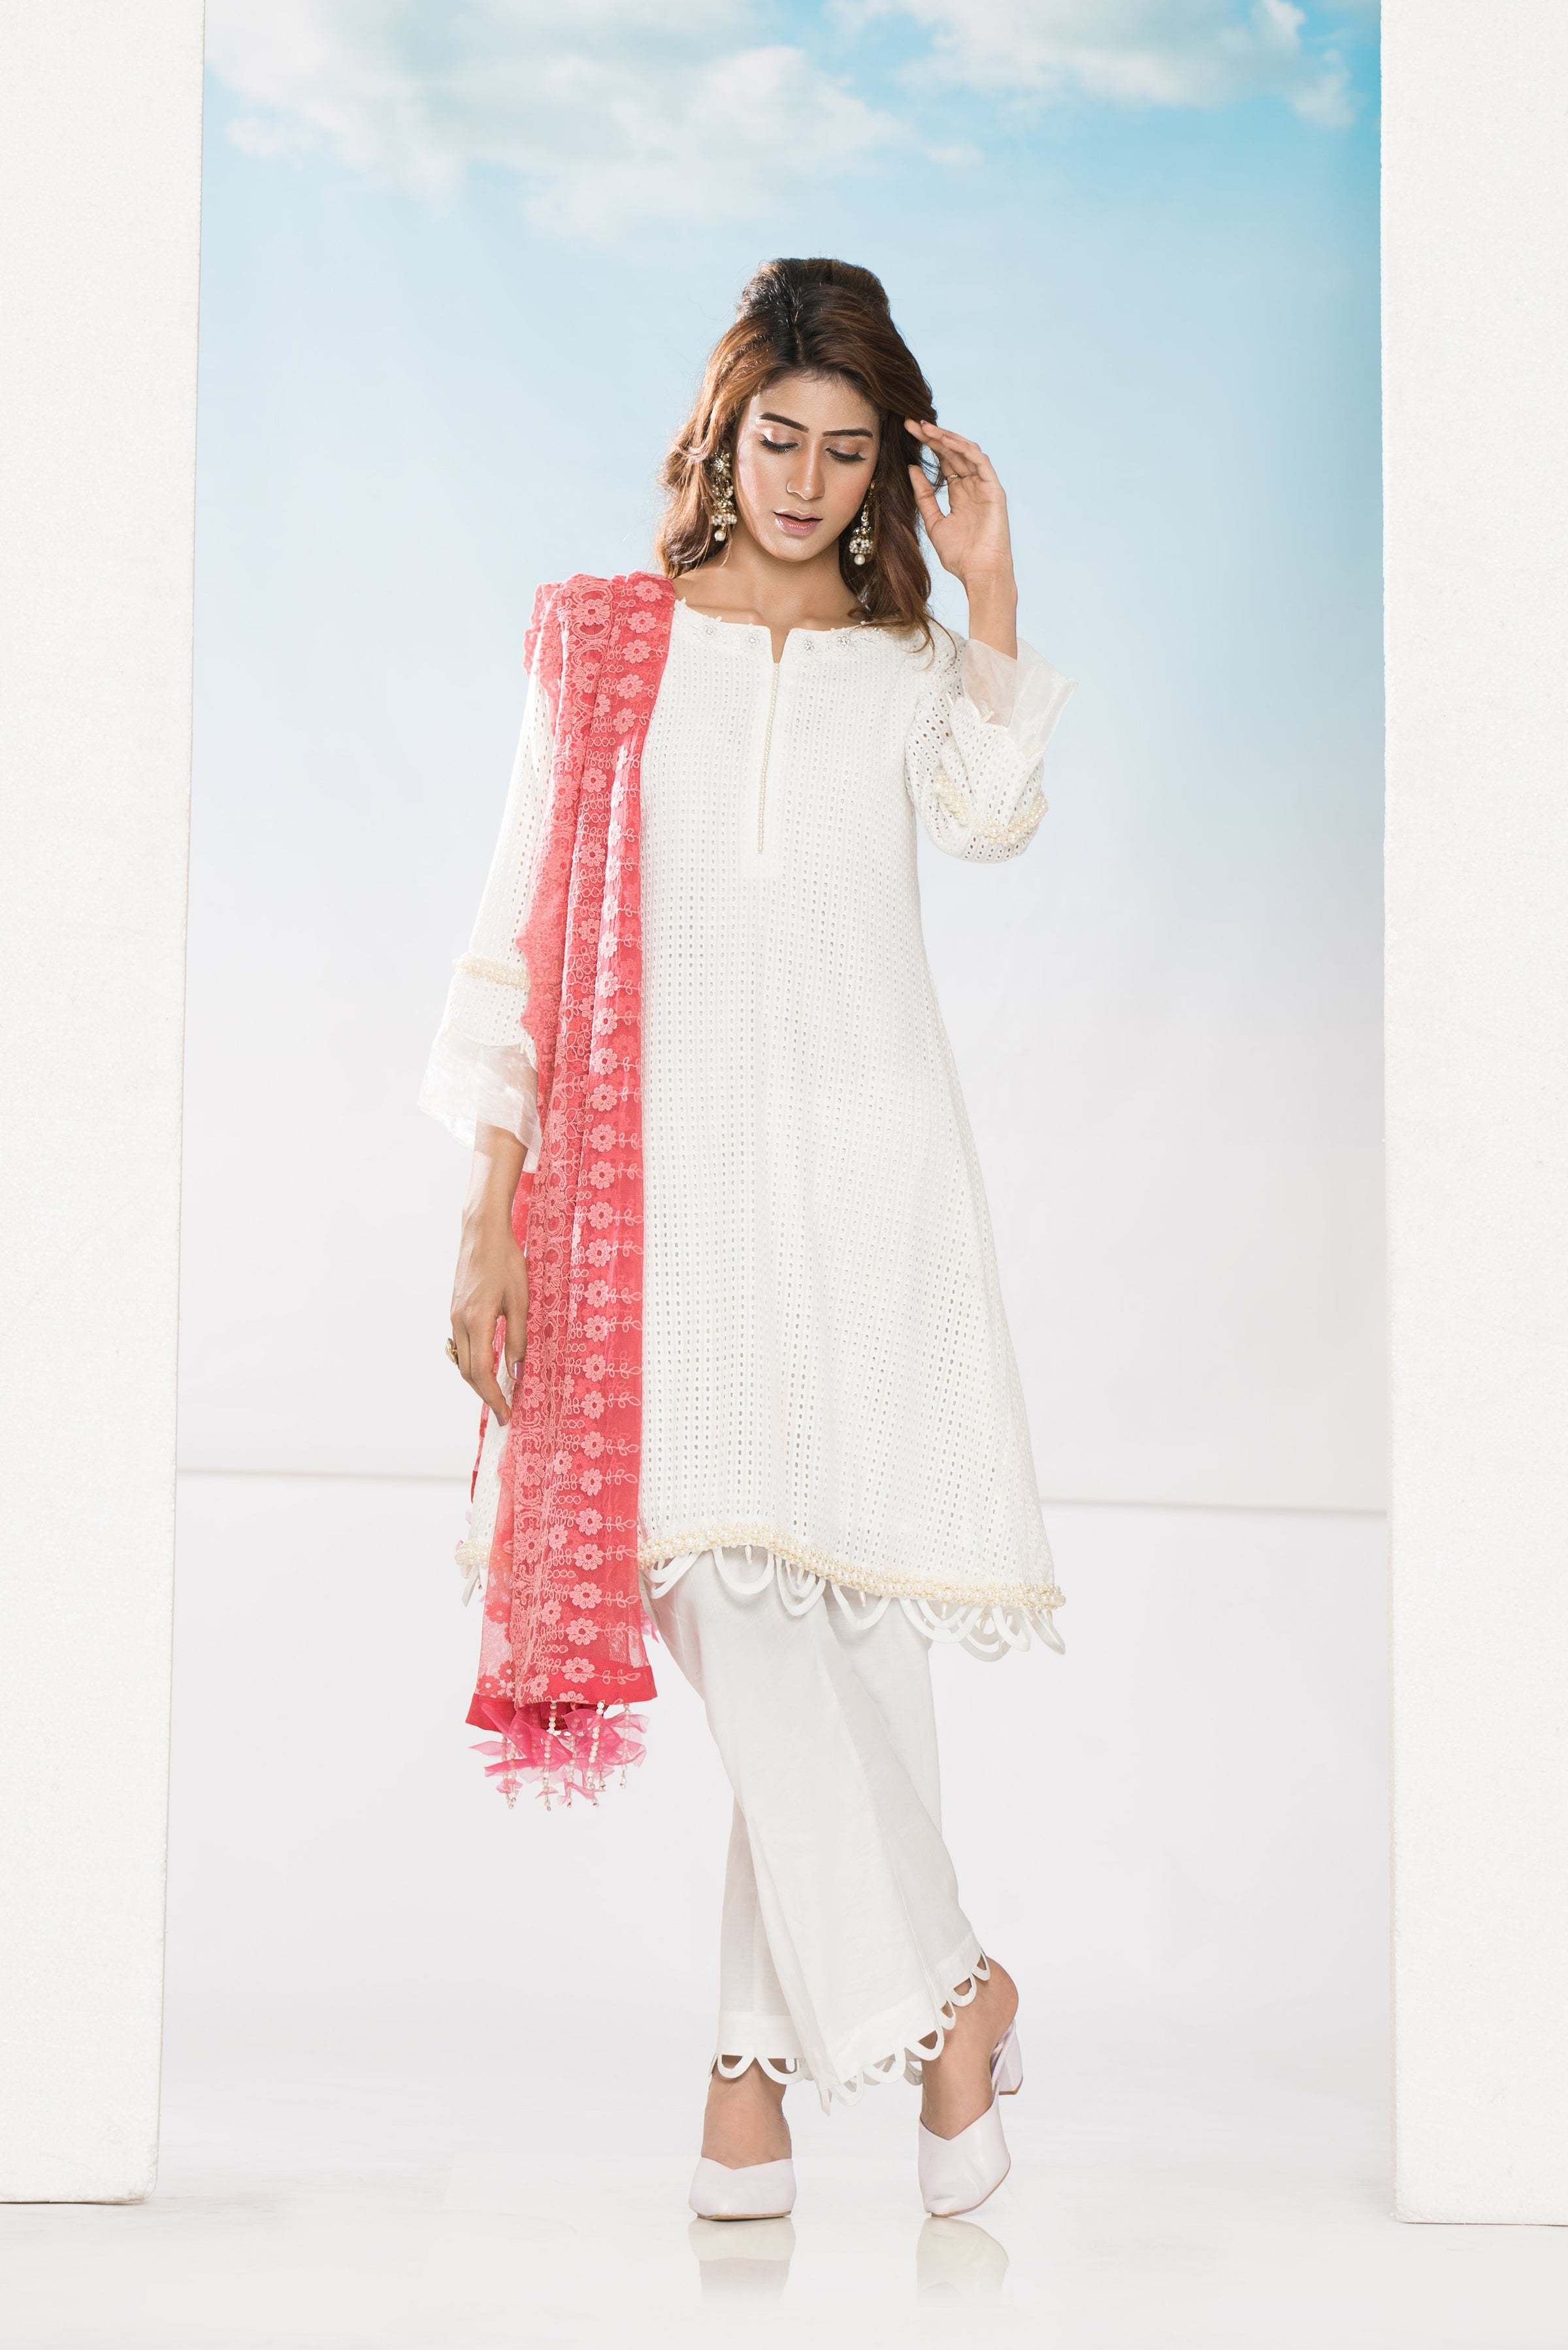 white dresses for girls pakistani